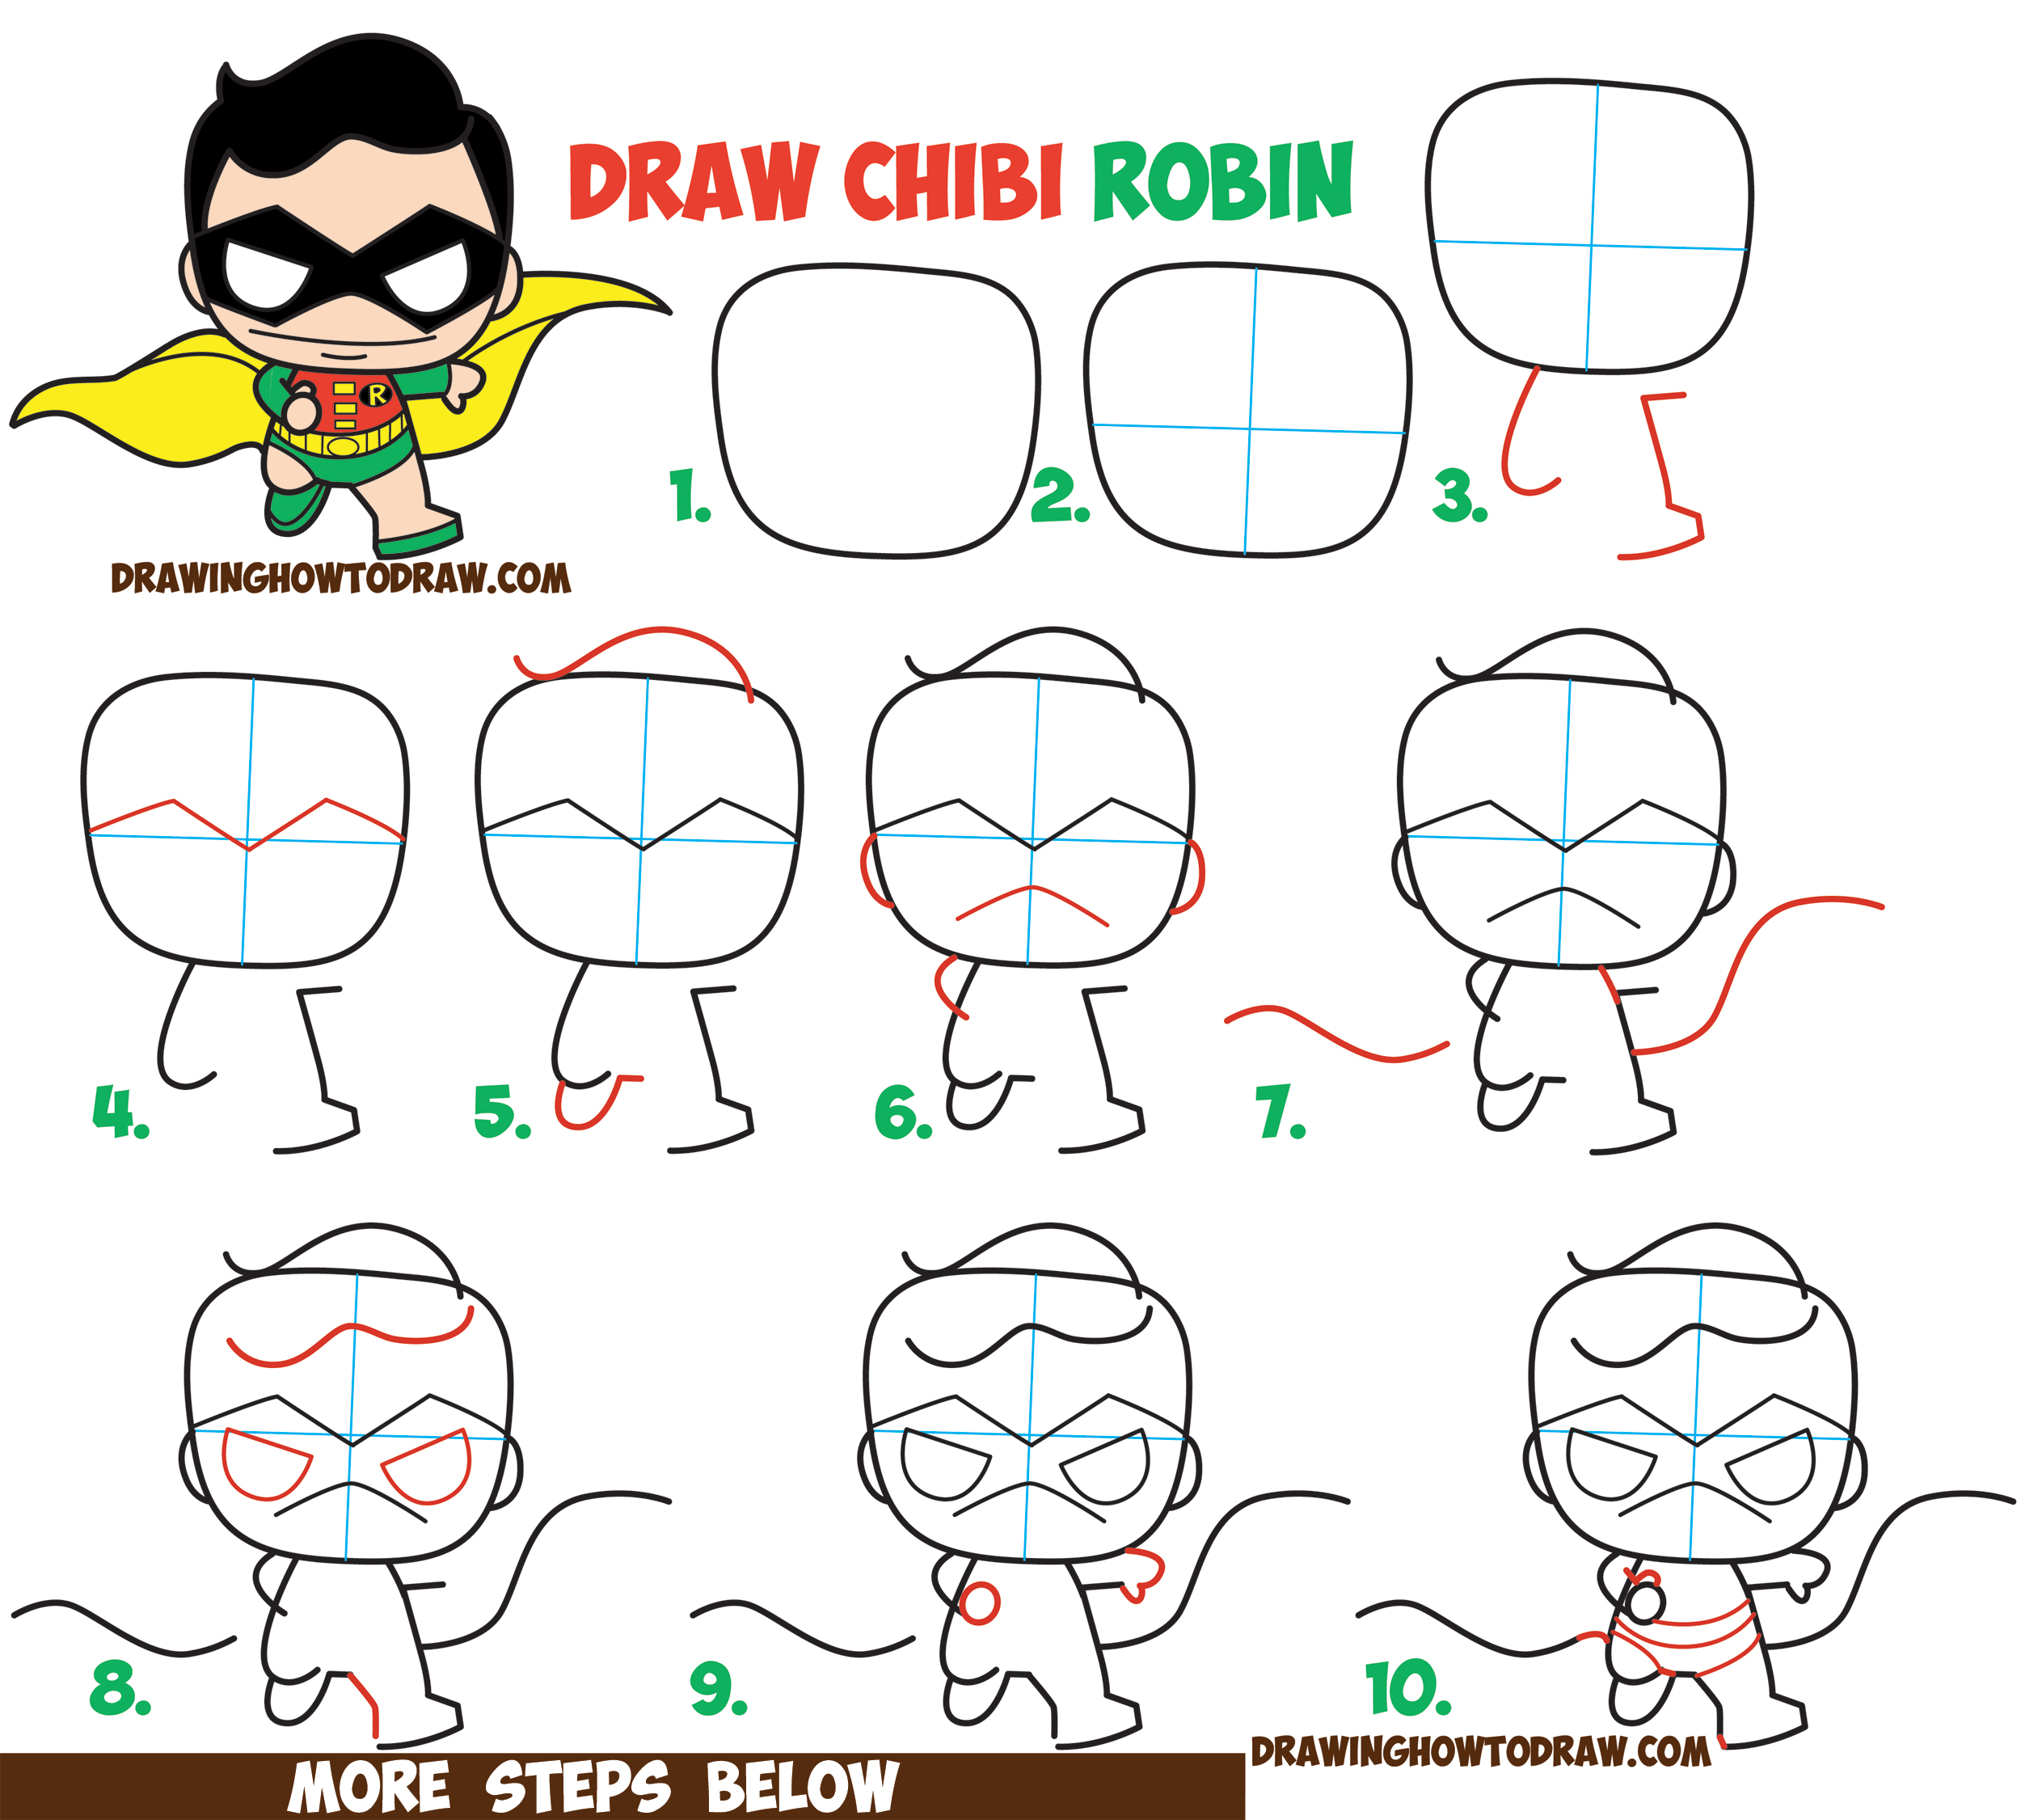 How to Draw Cute / Kawaii / Chibi Robin from DC Comics' Batman & Robin